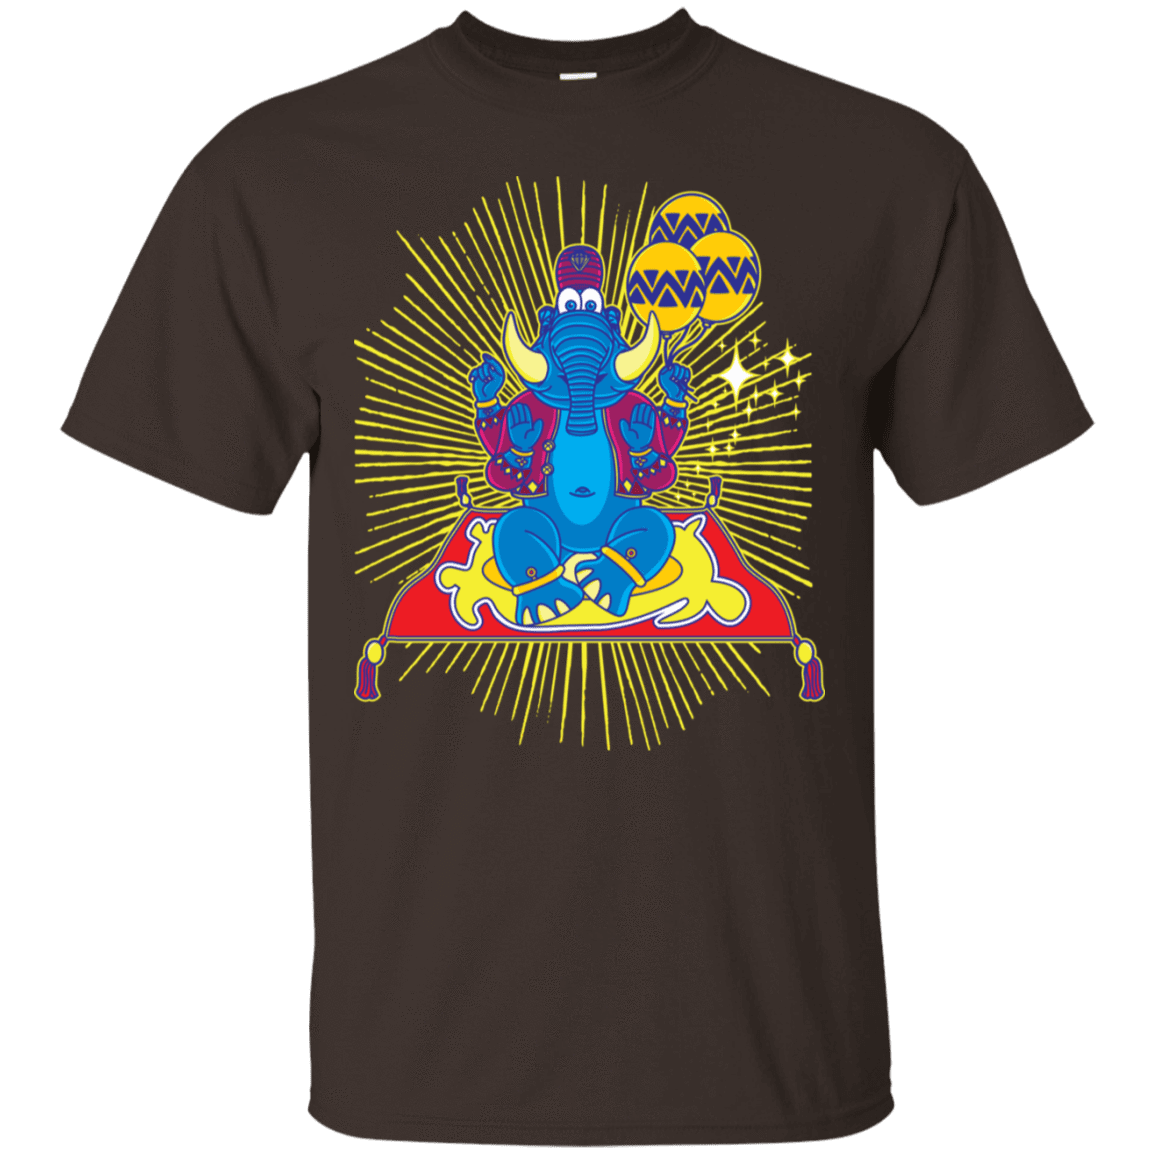 T-Shirts Dark Chocolate / S Elephant God T-Shirt